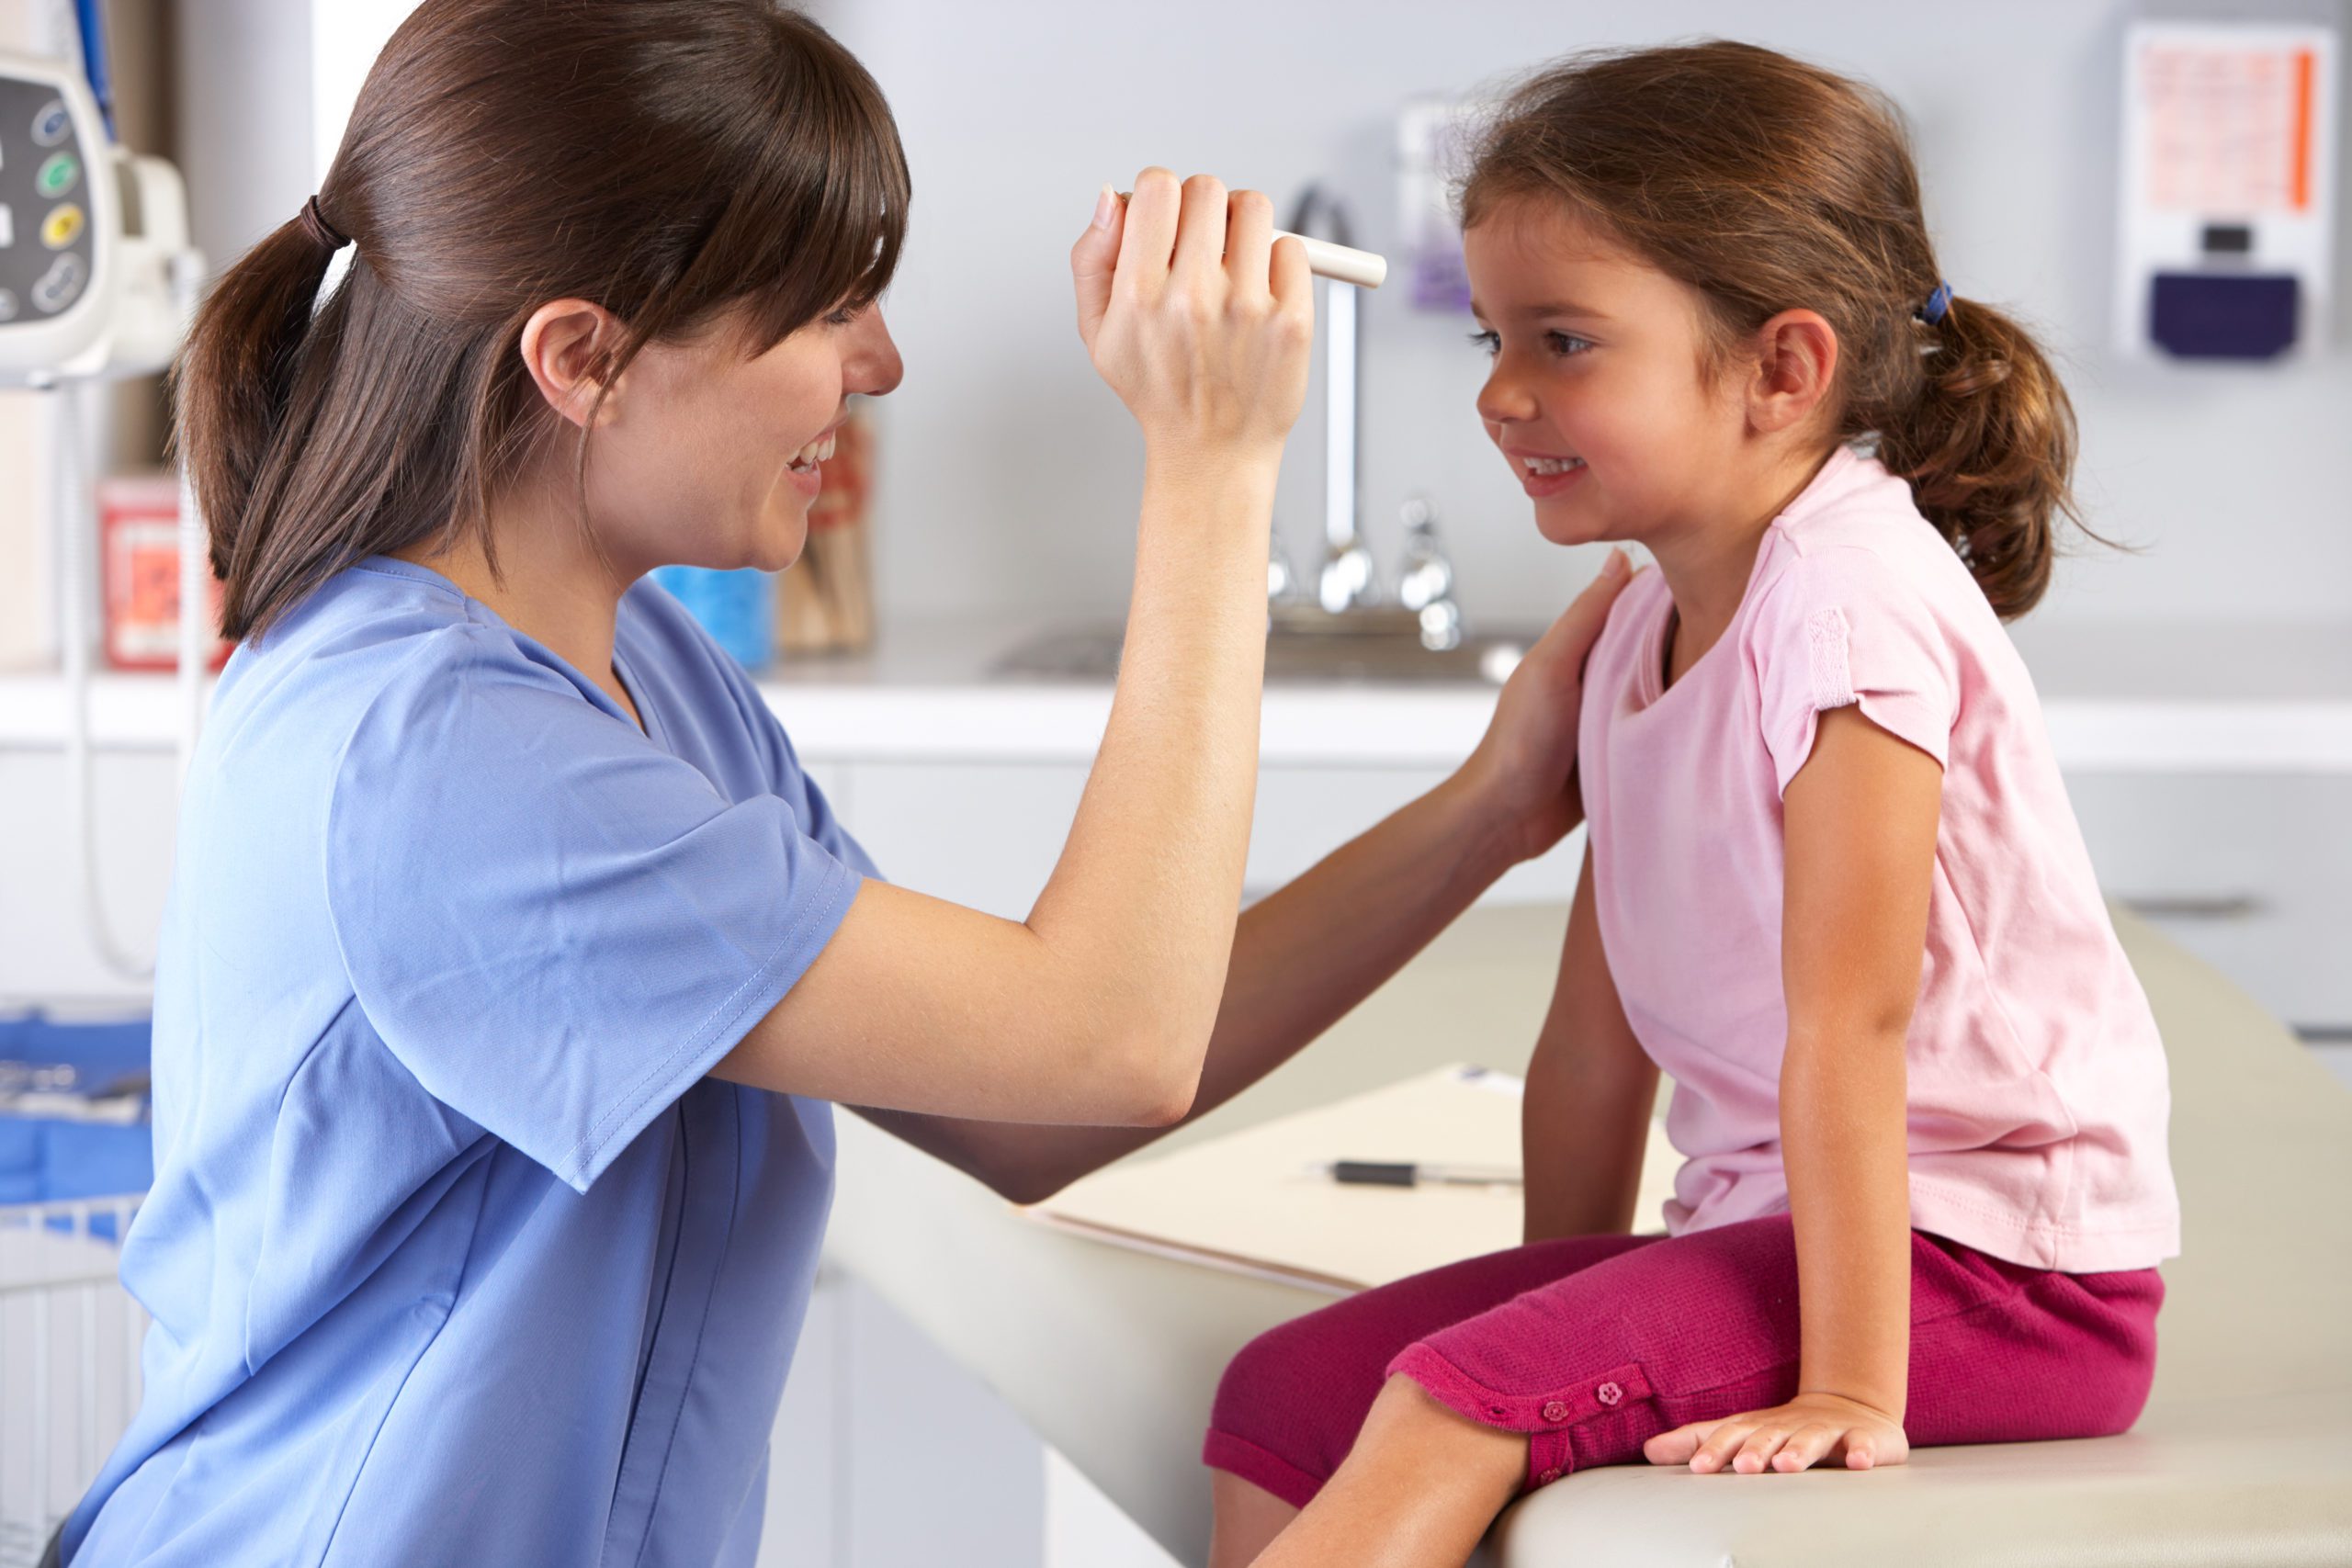 The Heat (Rash) is On - Frisco Pediatrician Entirely Kids Pediatrics